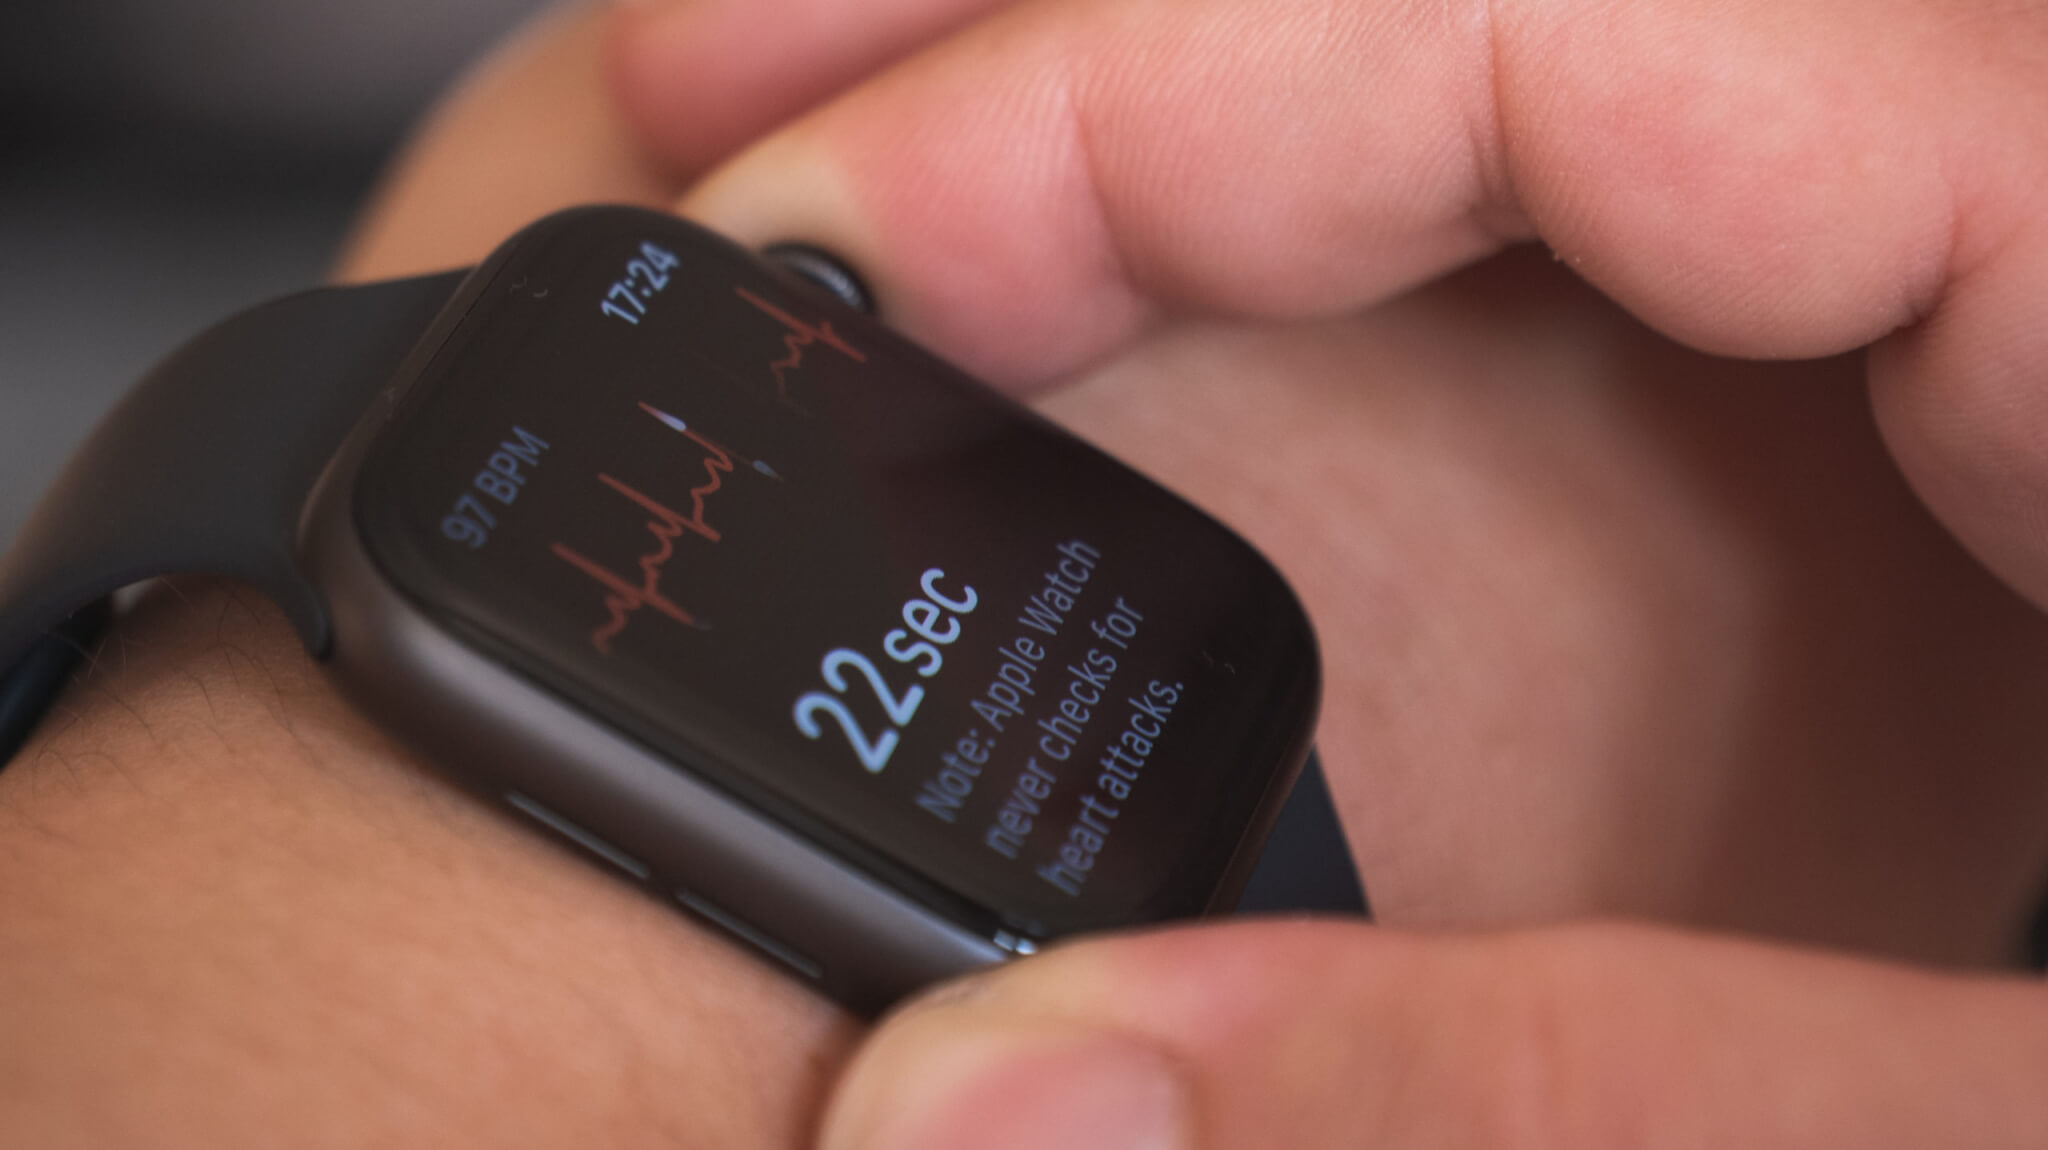 Apple Watch: Smartwatch wearable technology measuring heart rhythm via ECG